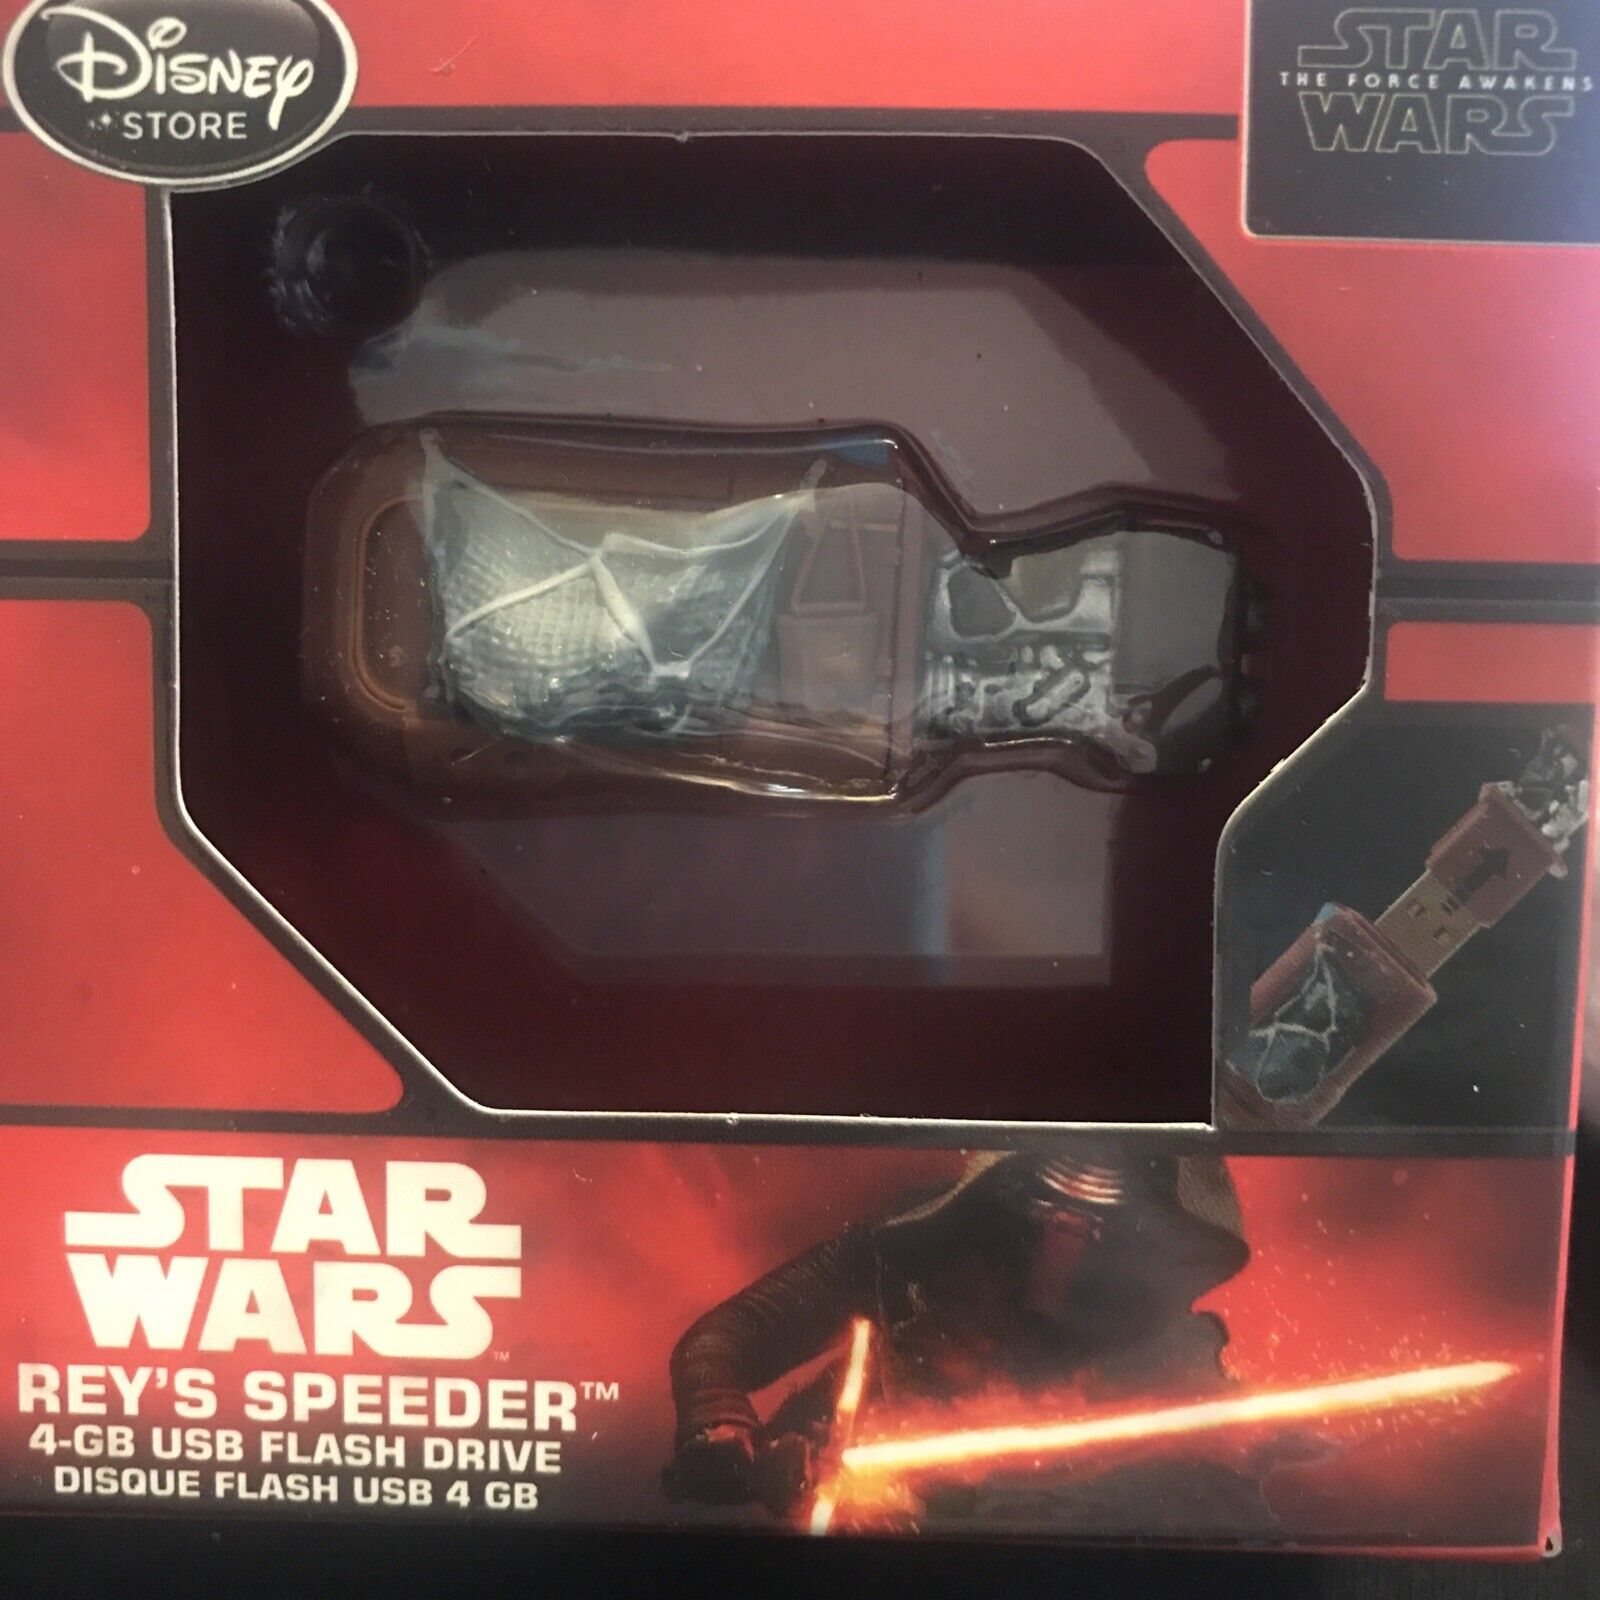 Disney Store Star Wars The Force Awakens Reys Speeder 4GB USB Flash Drive M123